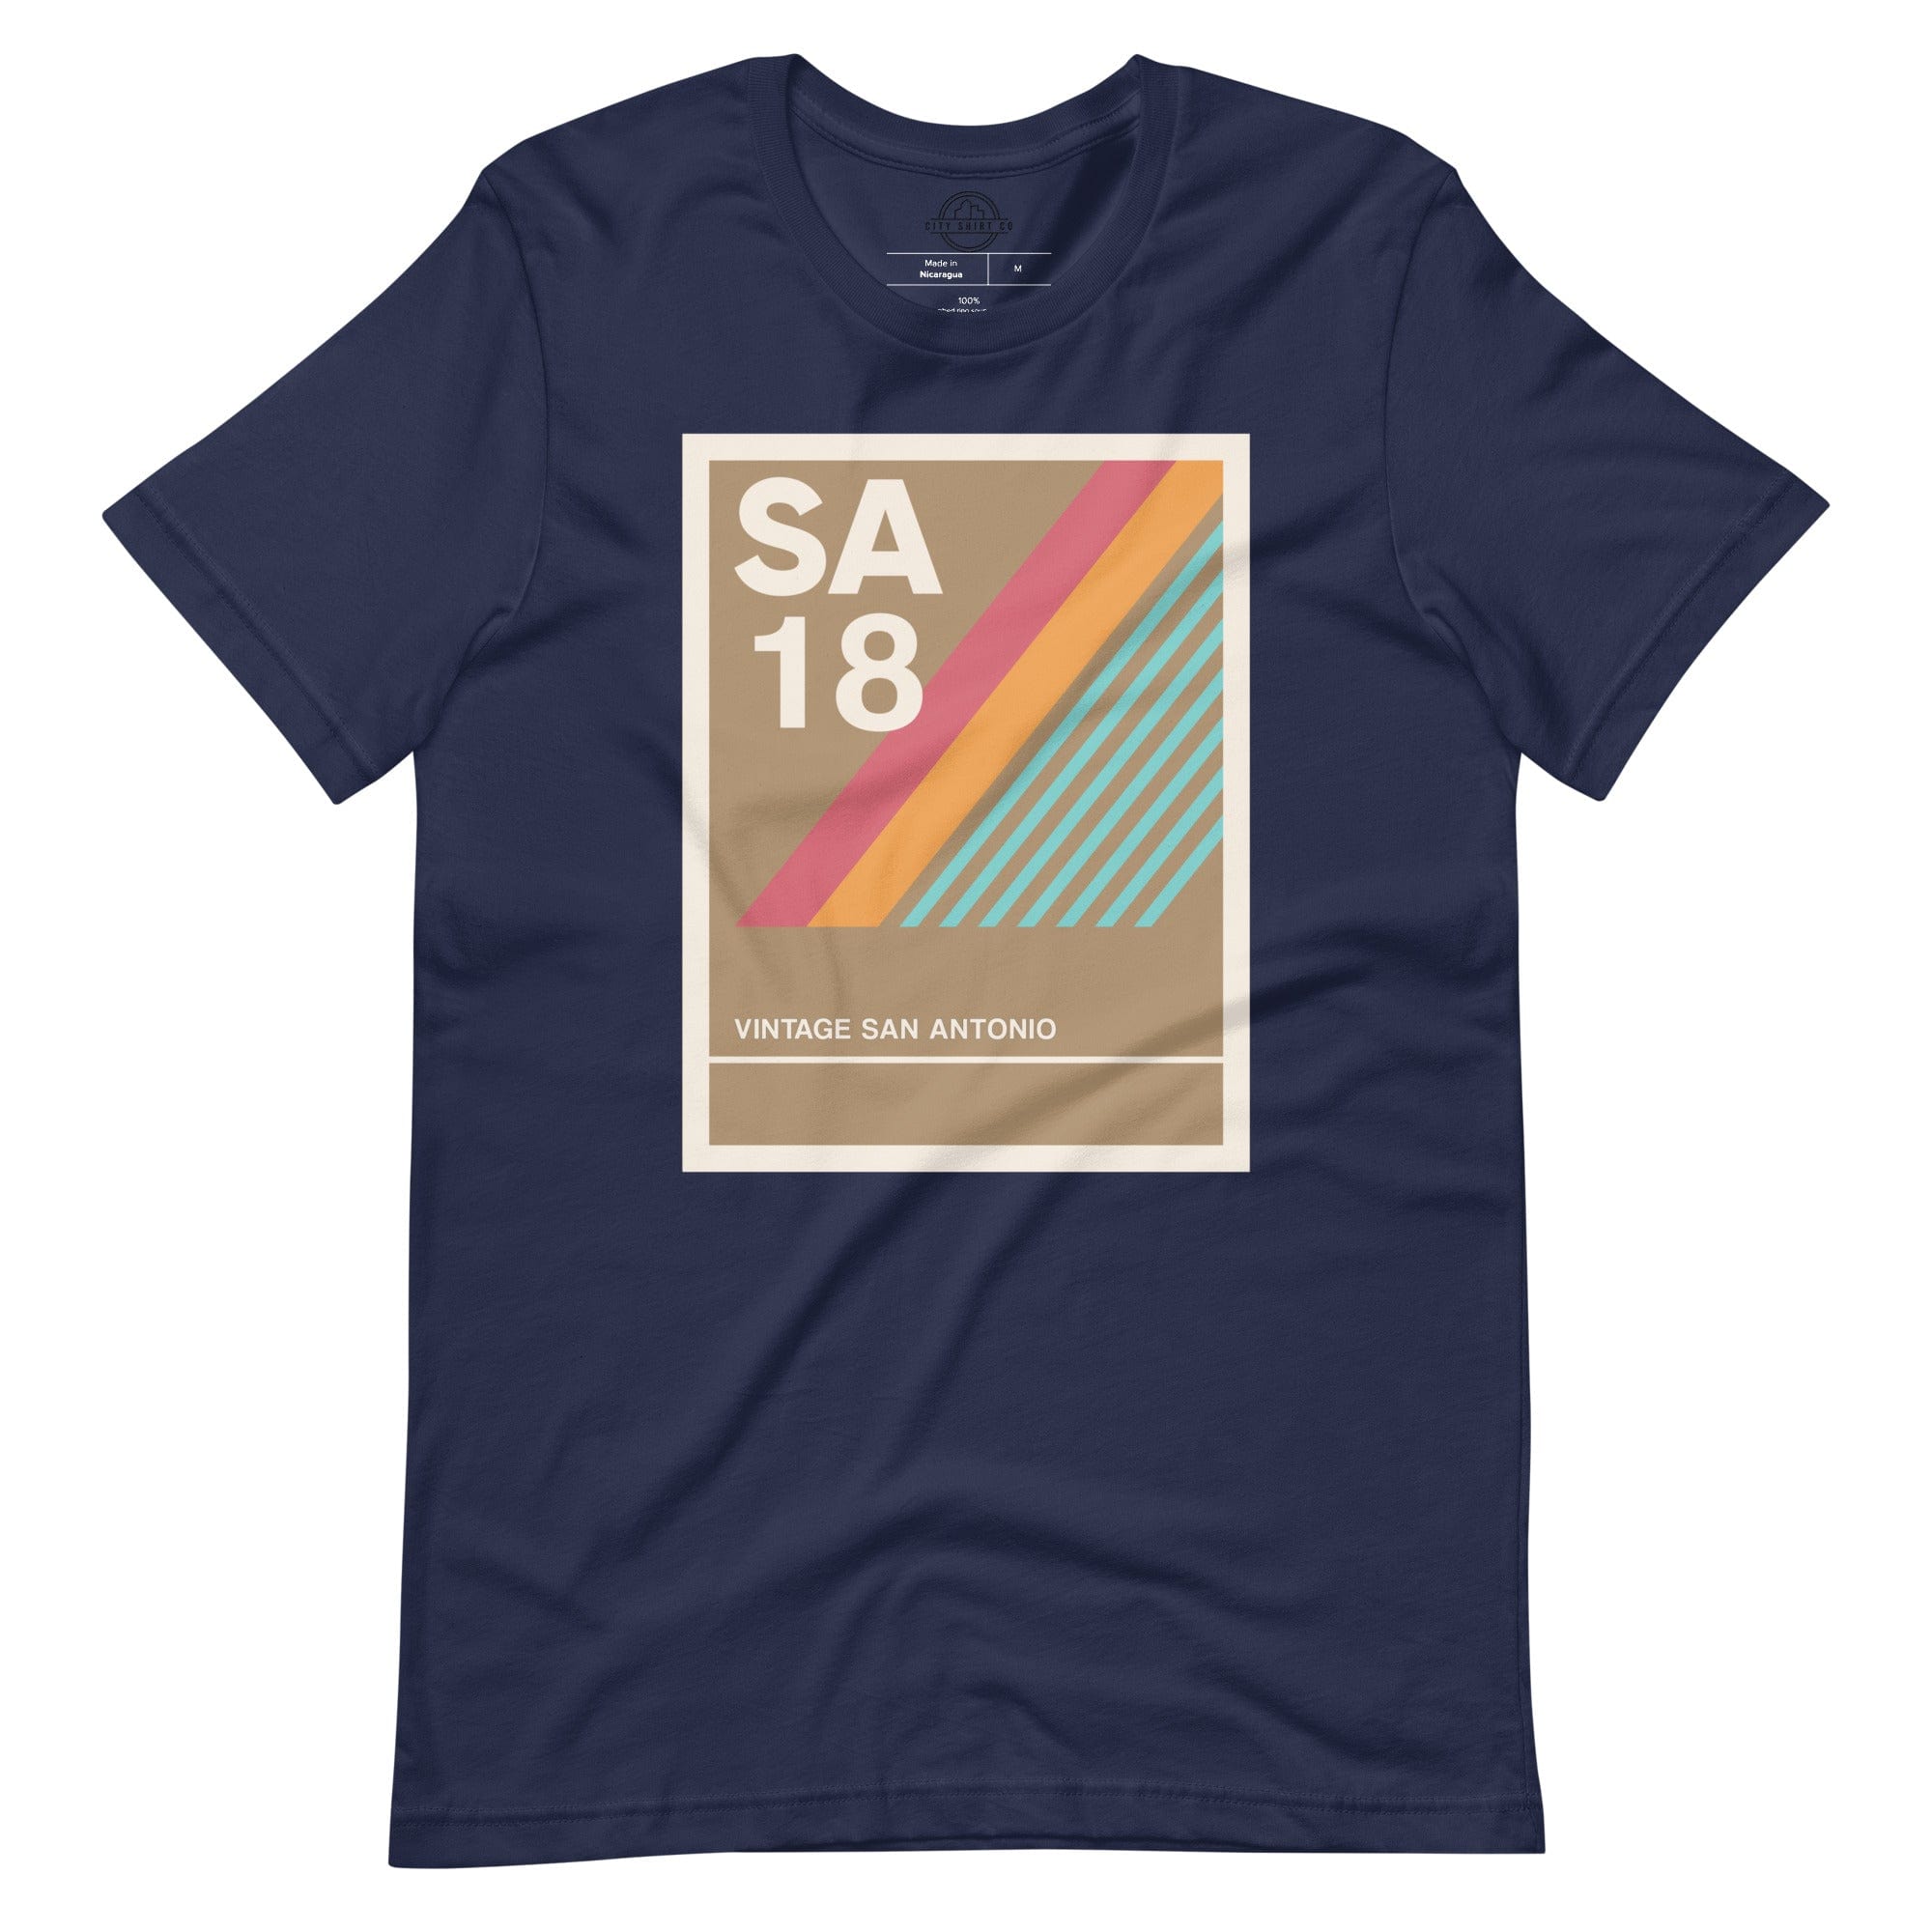 City Shirt Co Vintage San Antonio T-Shirt Navy / S